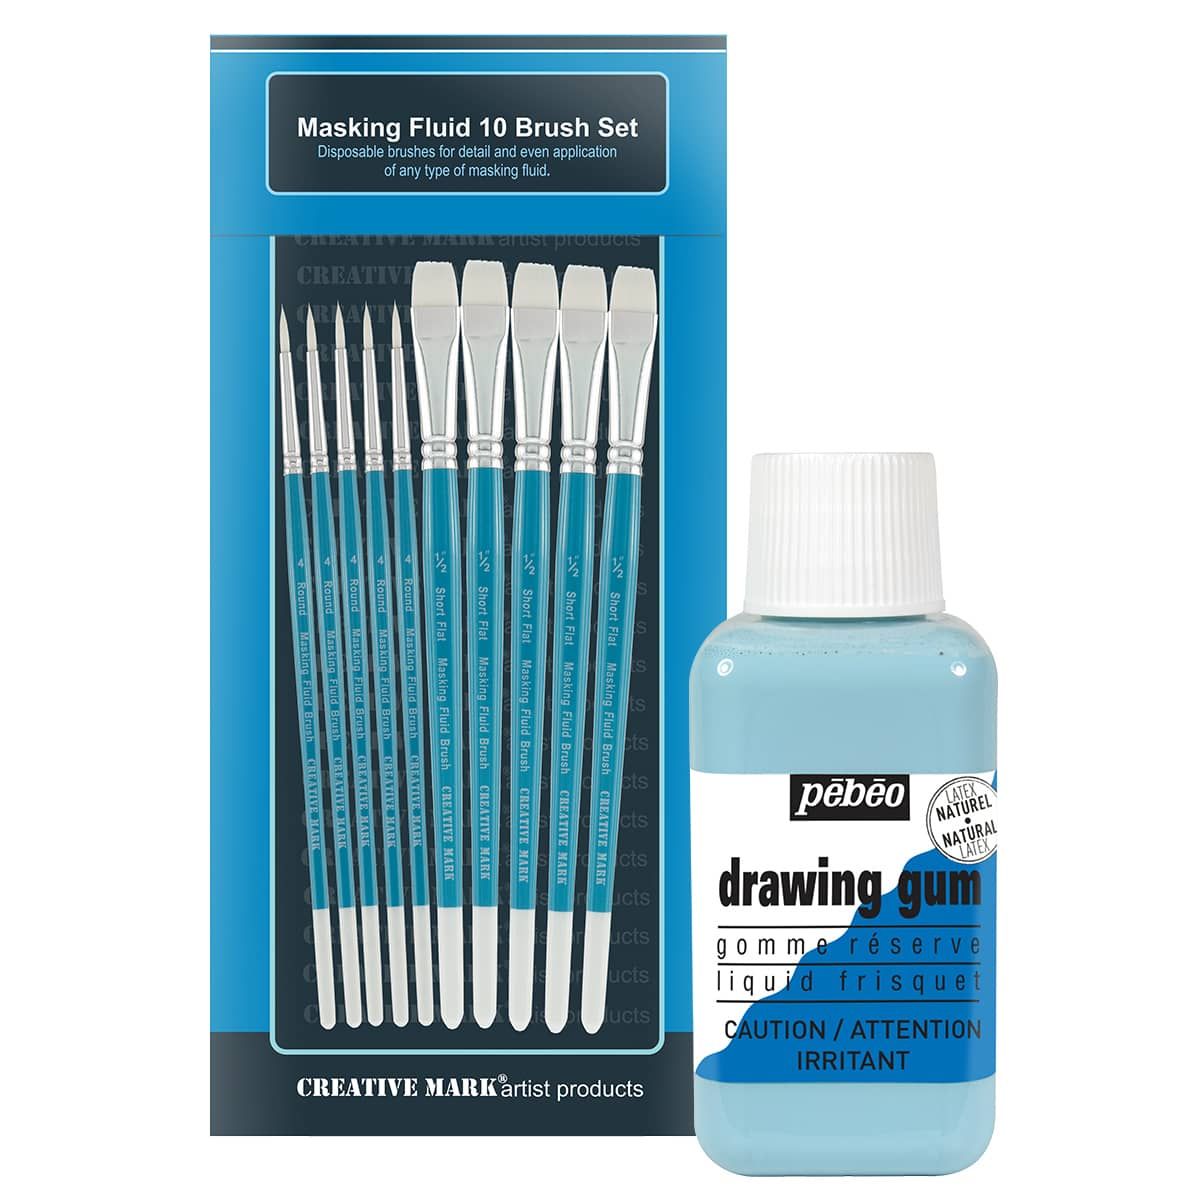 Creative Mark Masking Fluid Brush Set of 10 w/ Pebeo 250ml Drawing